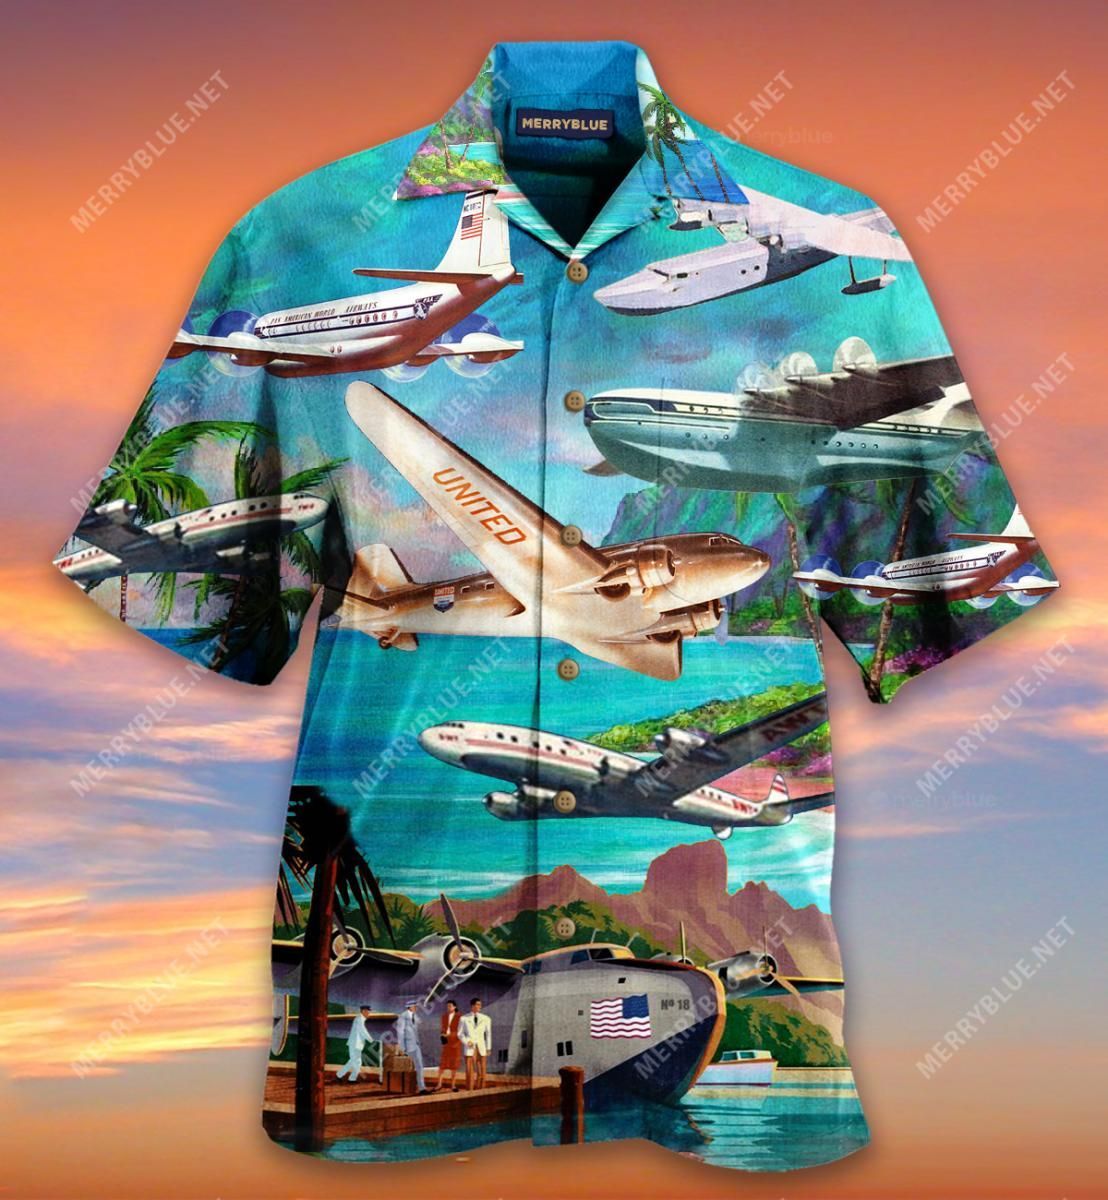 Fly To Hawaii Aircraft Aloha Hawaiian Shirt Colorful Short Sleeve Summer Beach Casual Shirt For Men And Women